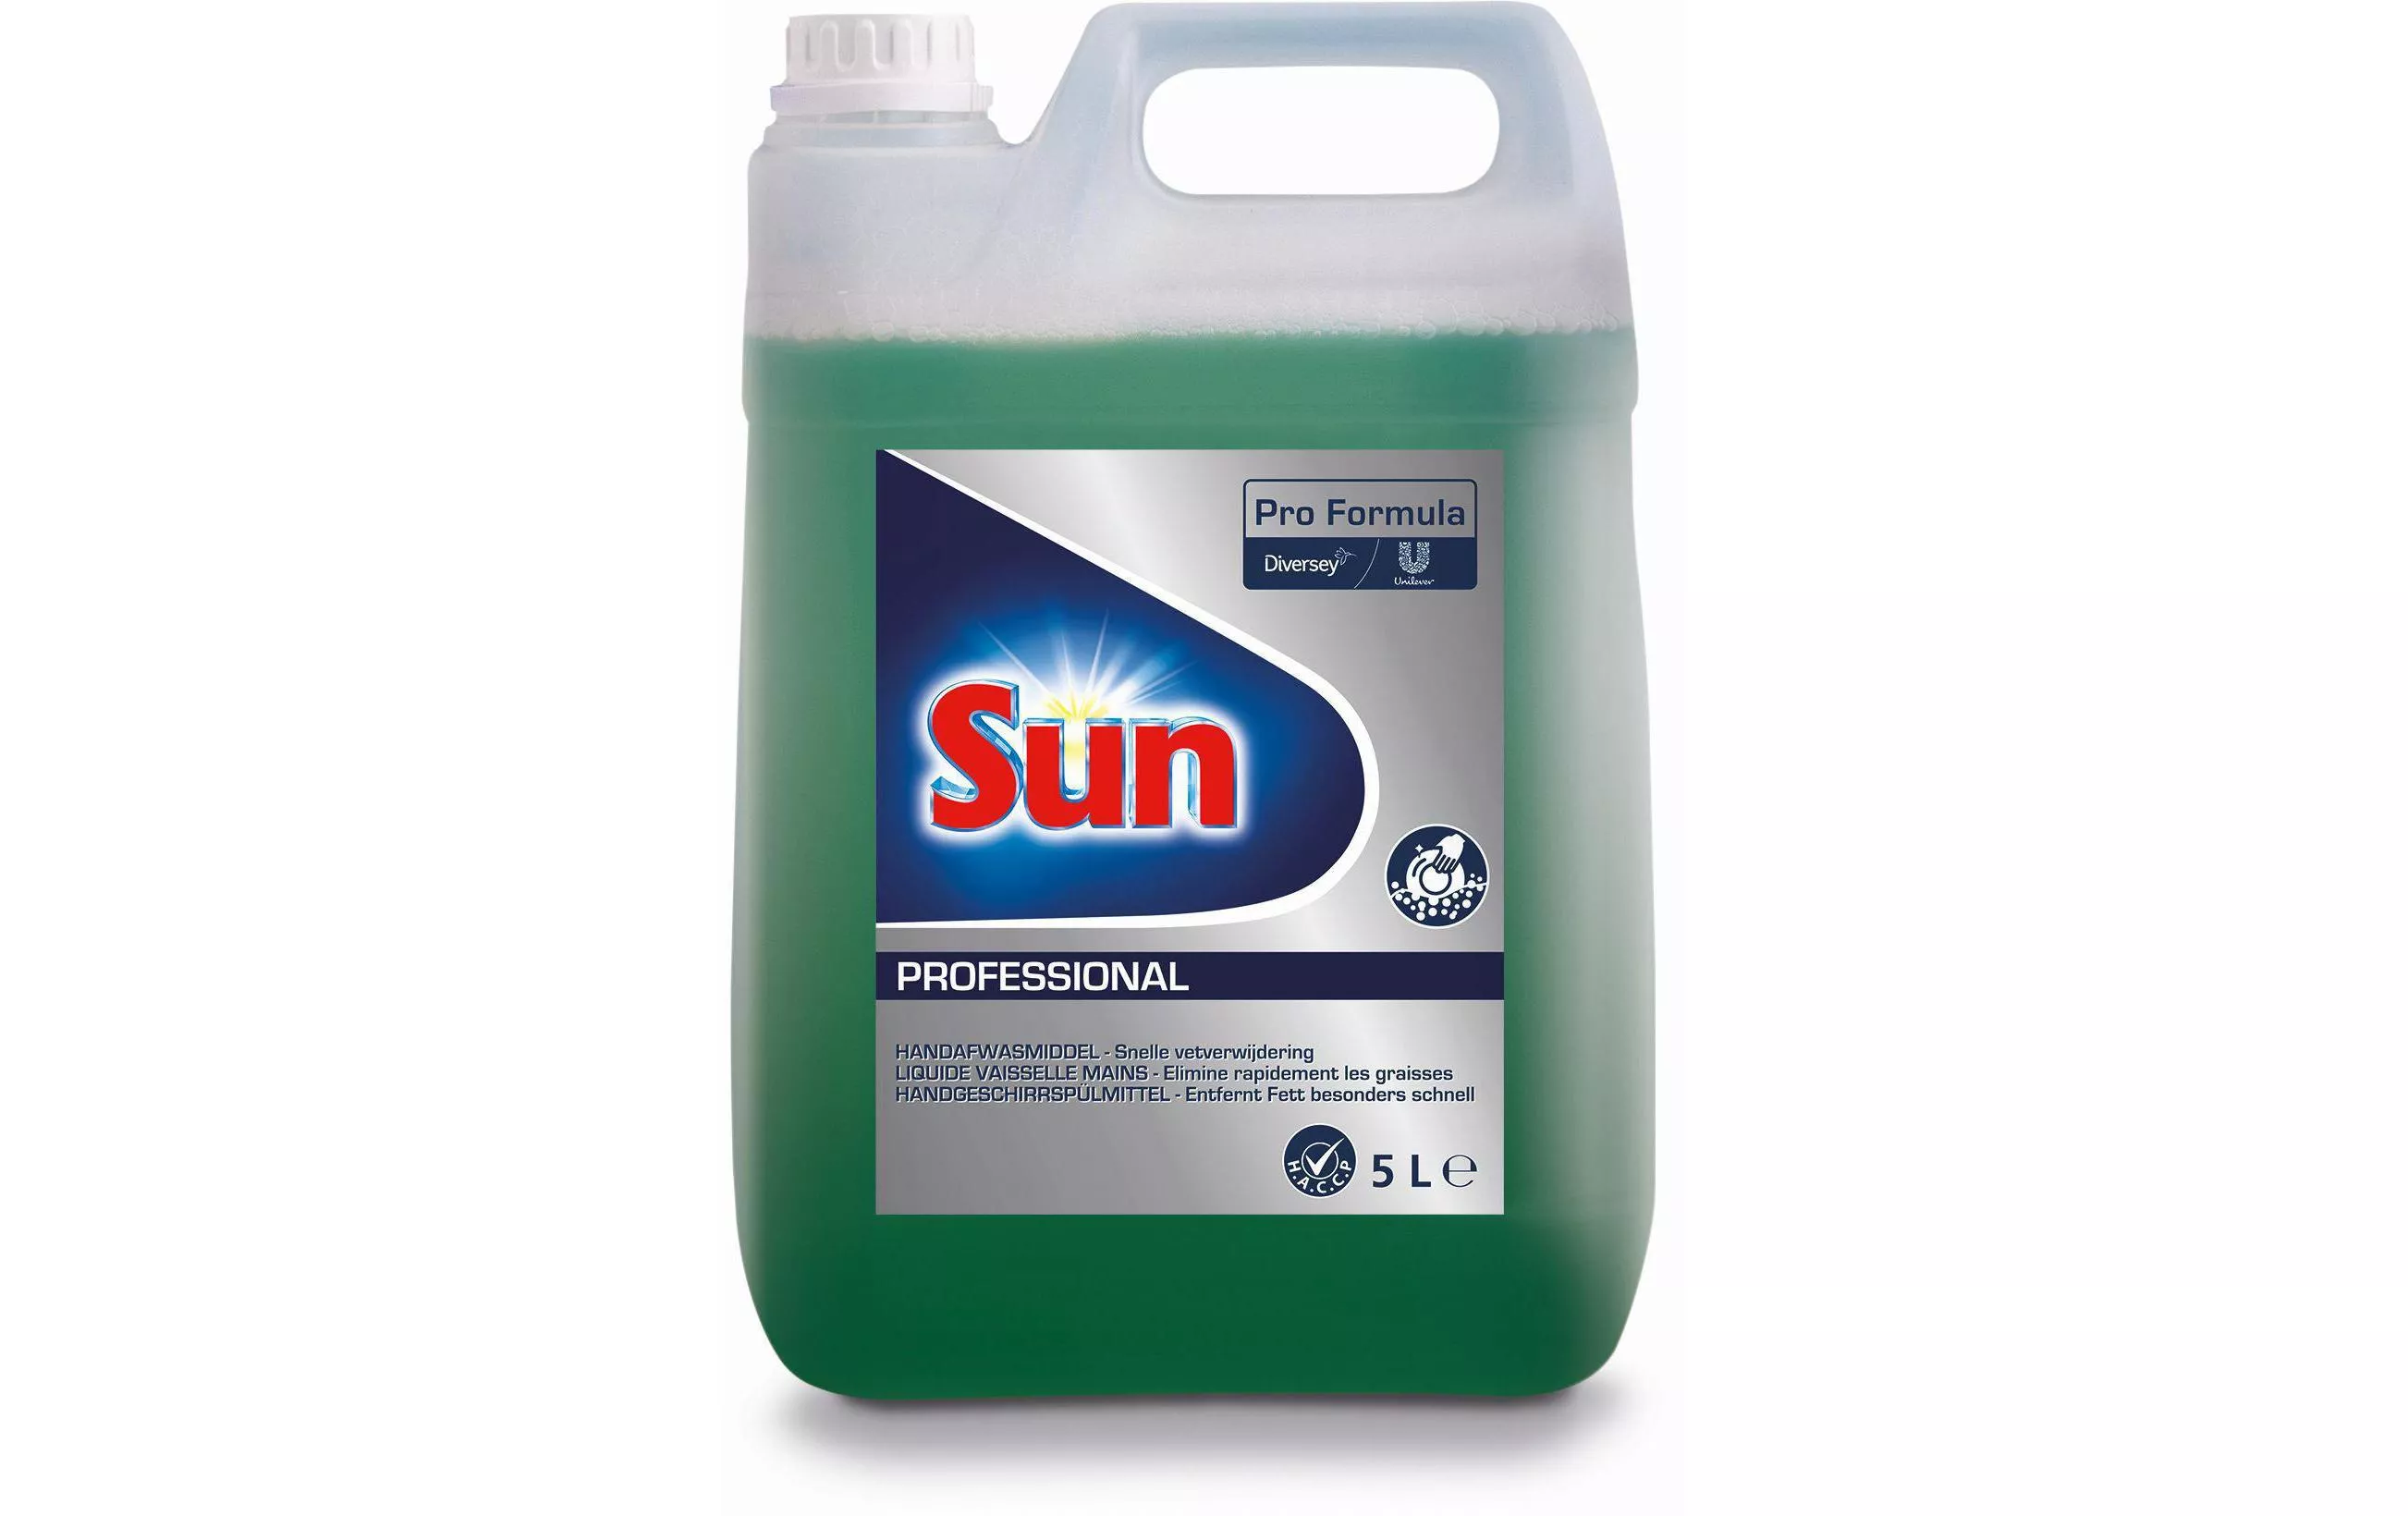 Sun Professional Hand Dishwashing Liquid 5 l